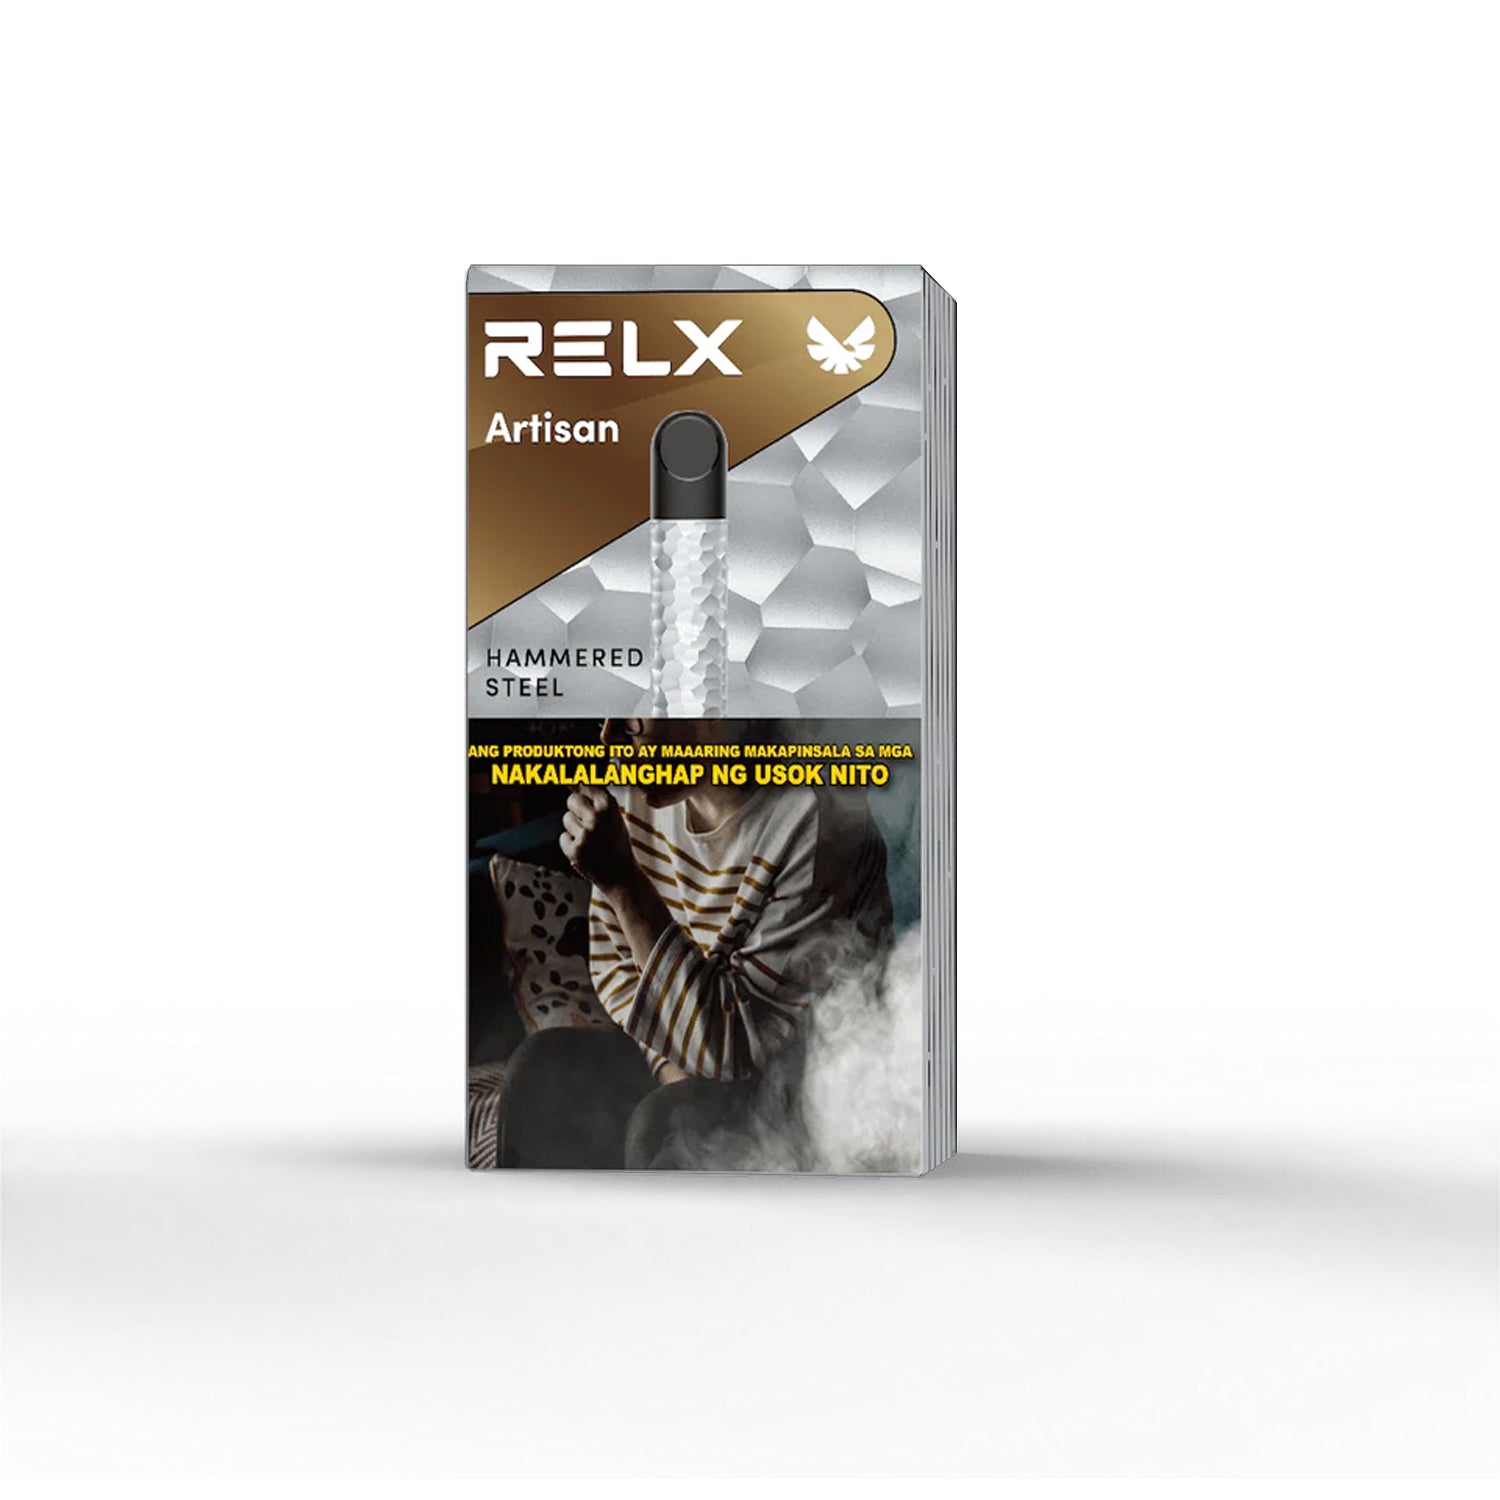 RELX Artisan Series: Hammered Steel – Alexa Philippines